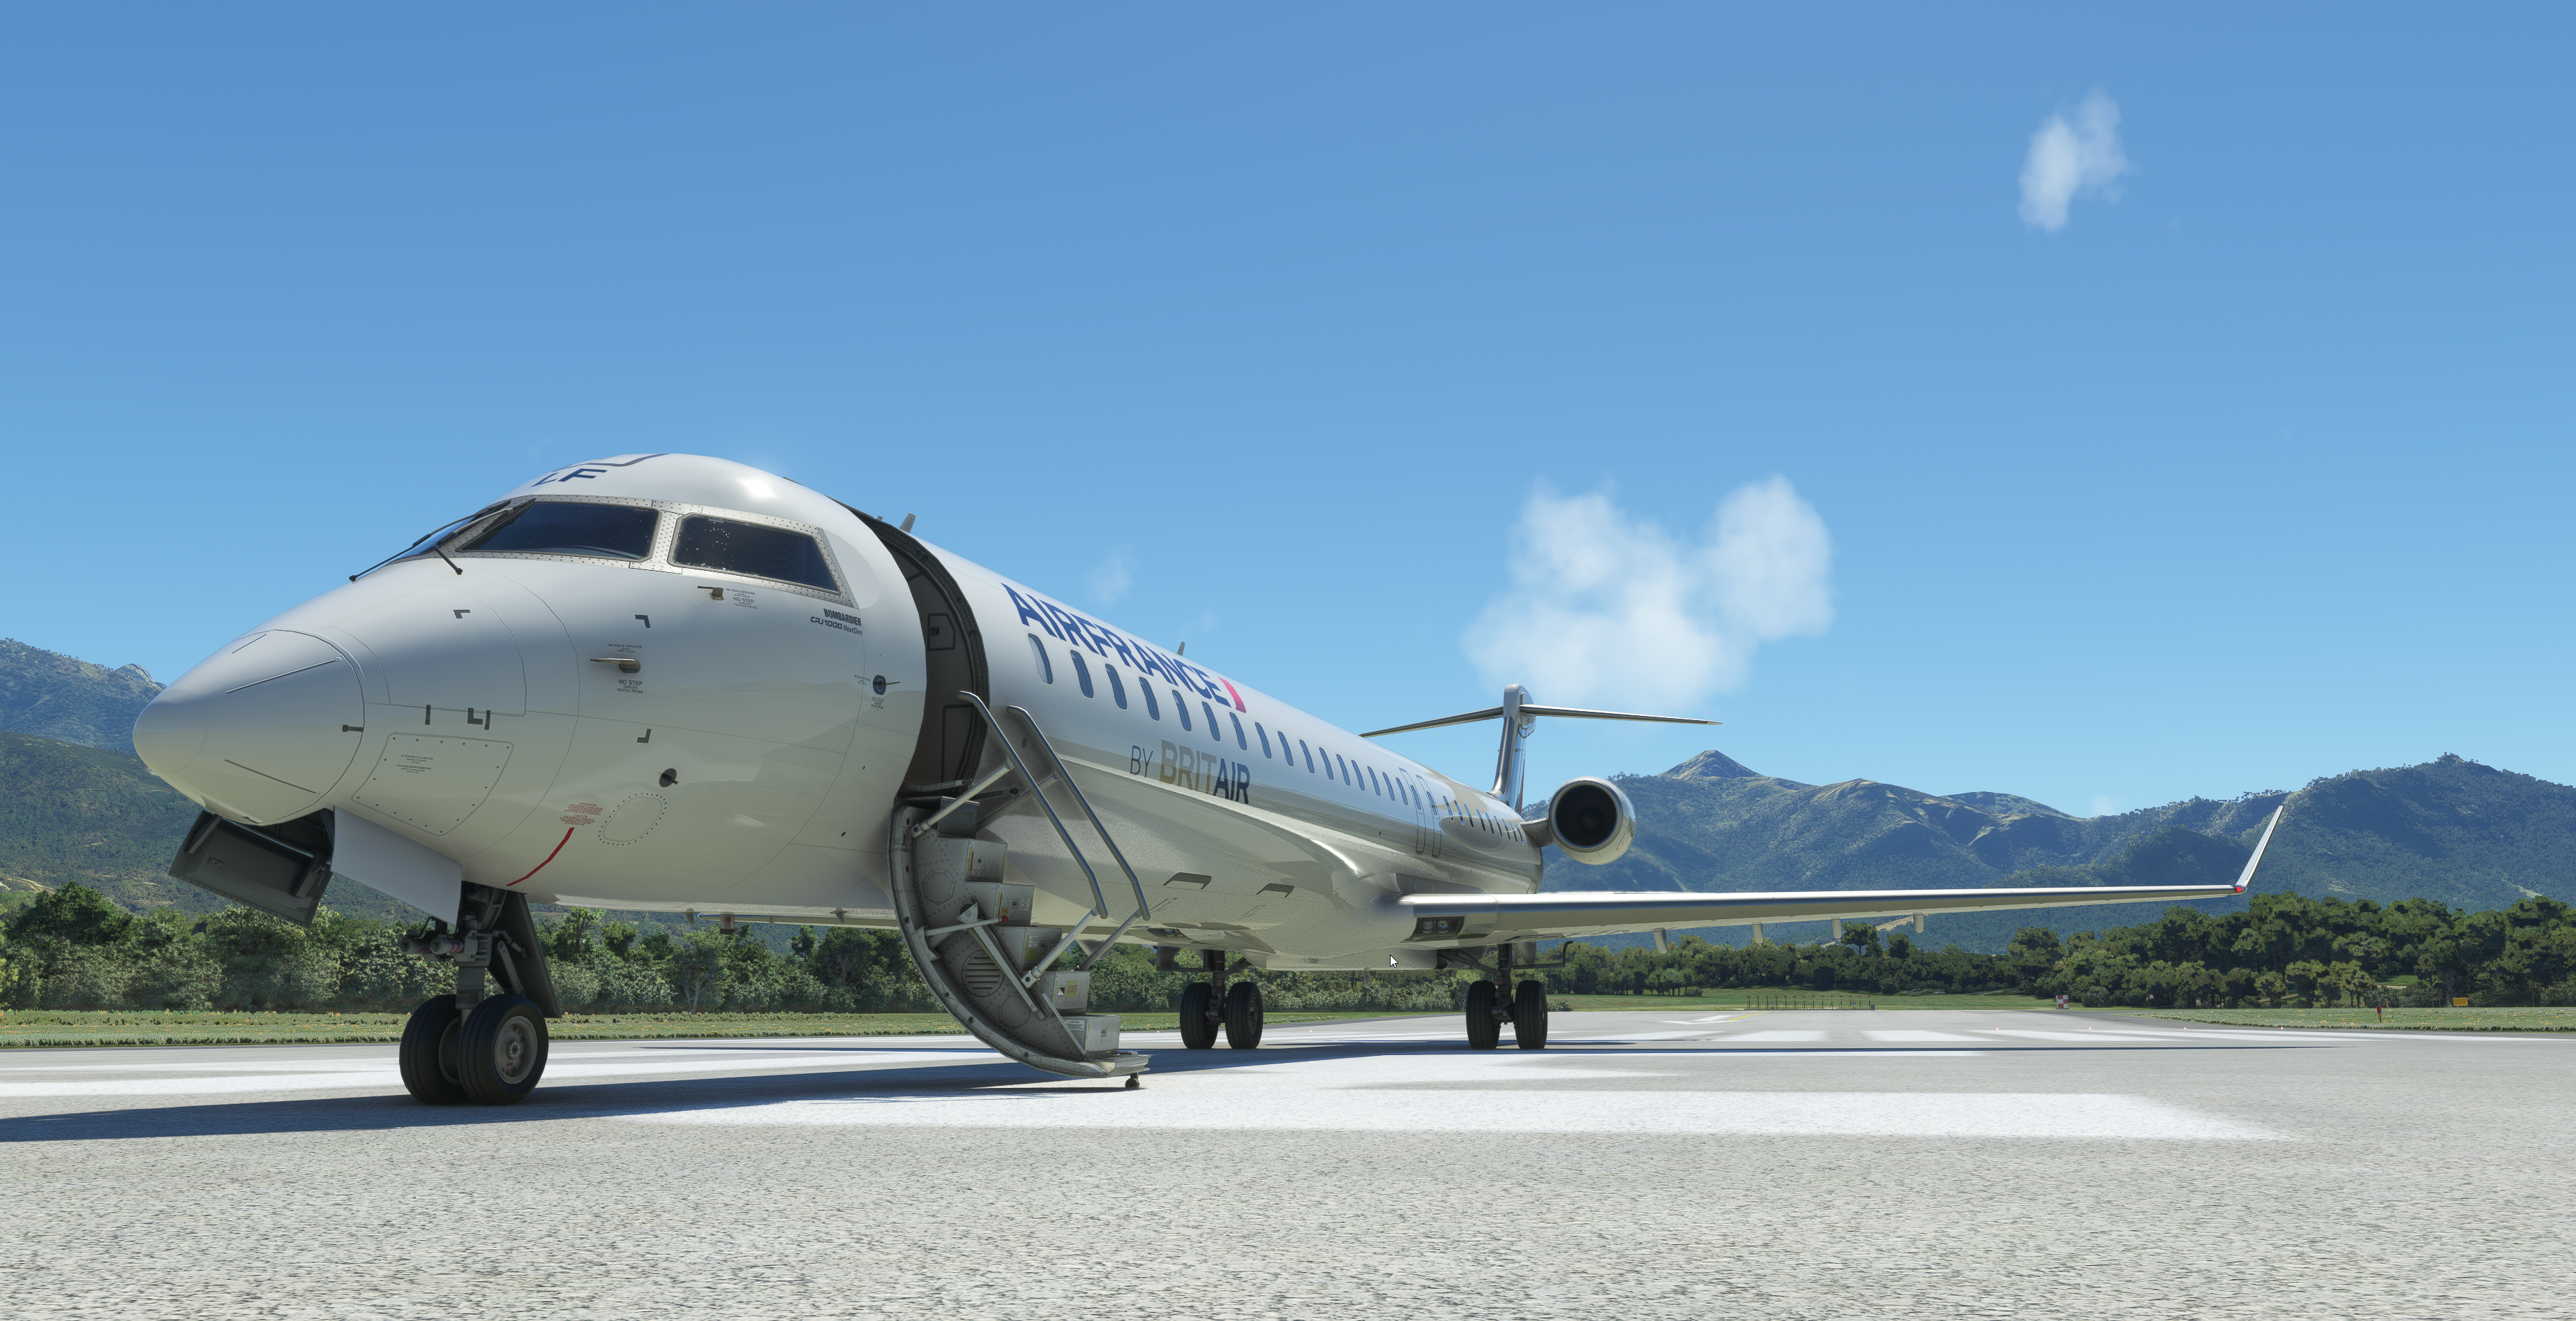 CRJ1000 - AIR FRANCE BY BRITAIR - F-HMLF- MSFS